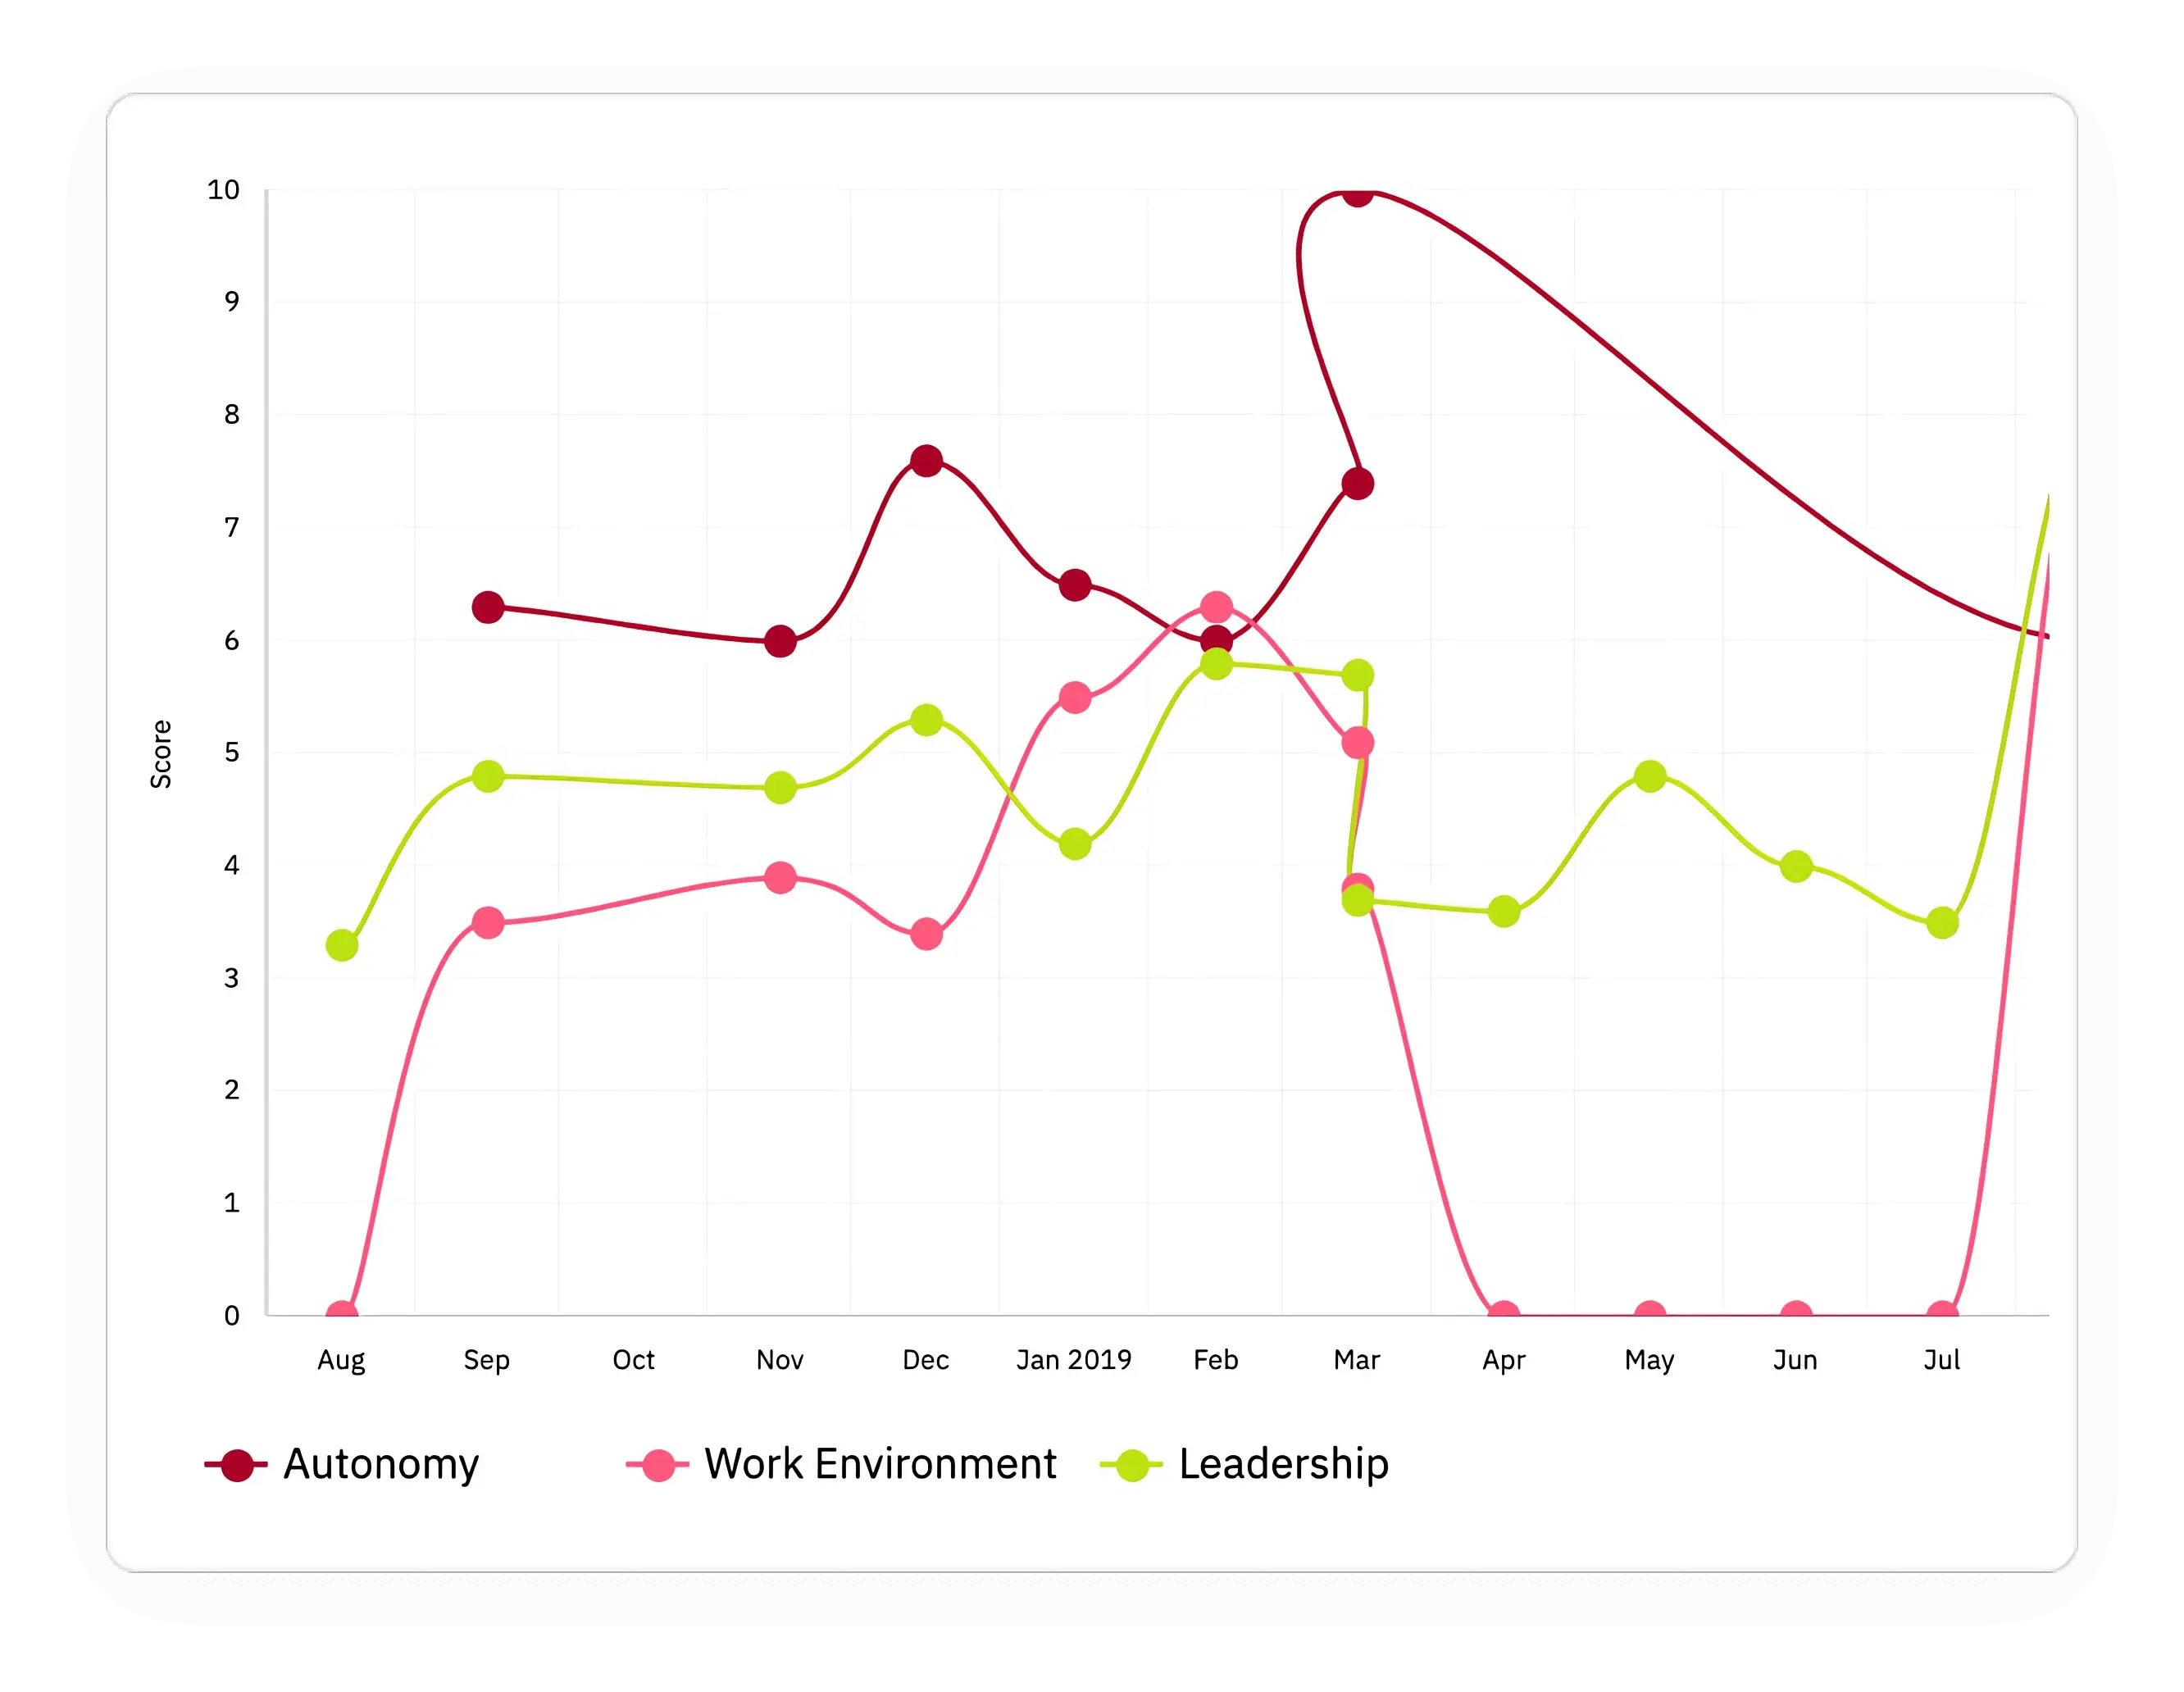 Comparison of employee engagement survey scores by drivers